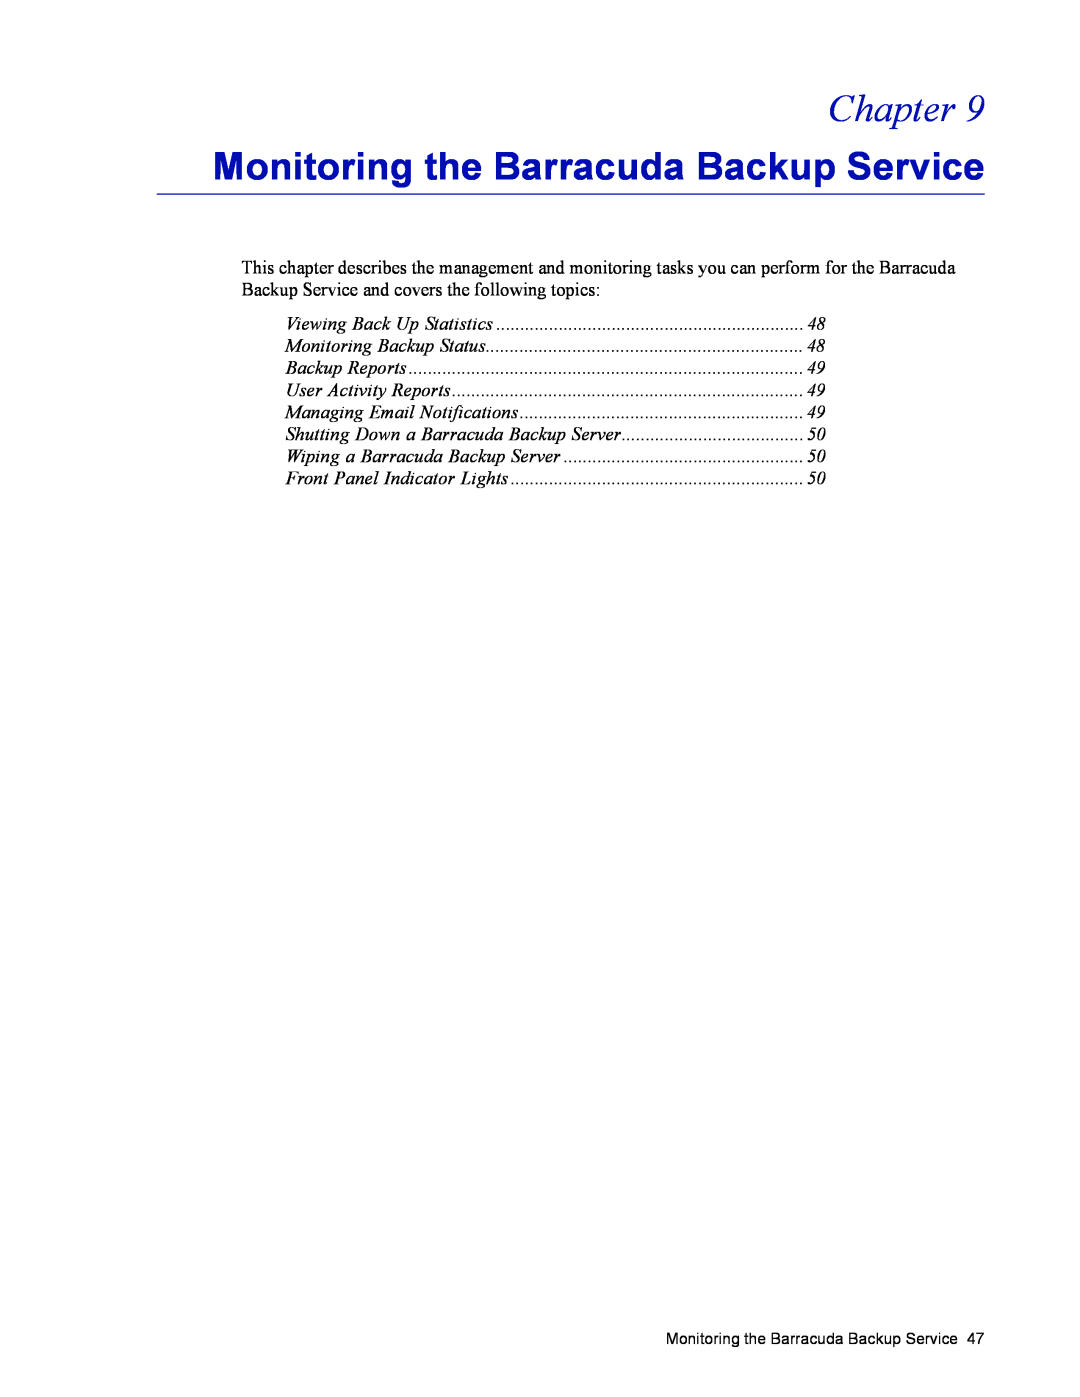 Barracuda Networks 4 manual Monitoring the Barracuda Backup Service, Chapter 